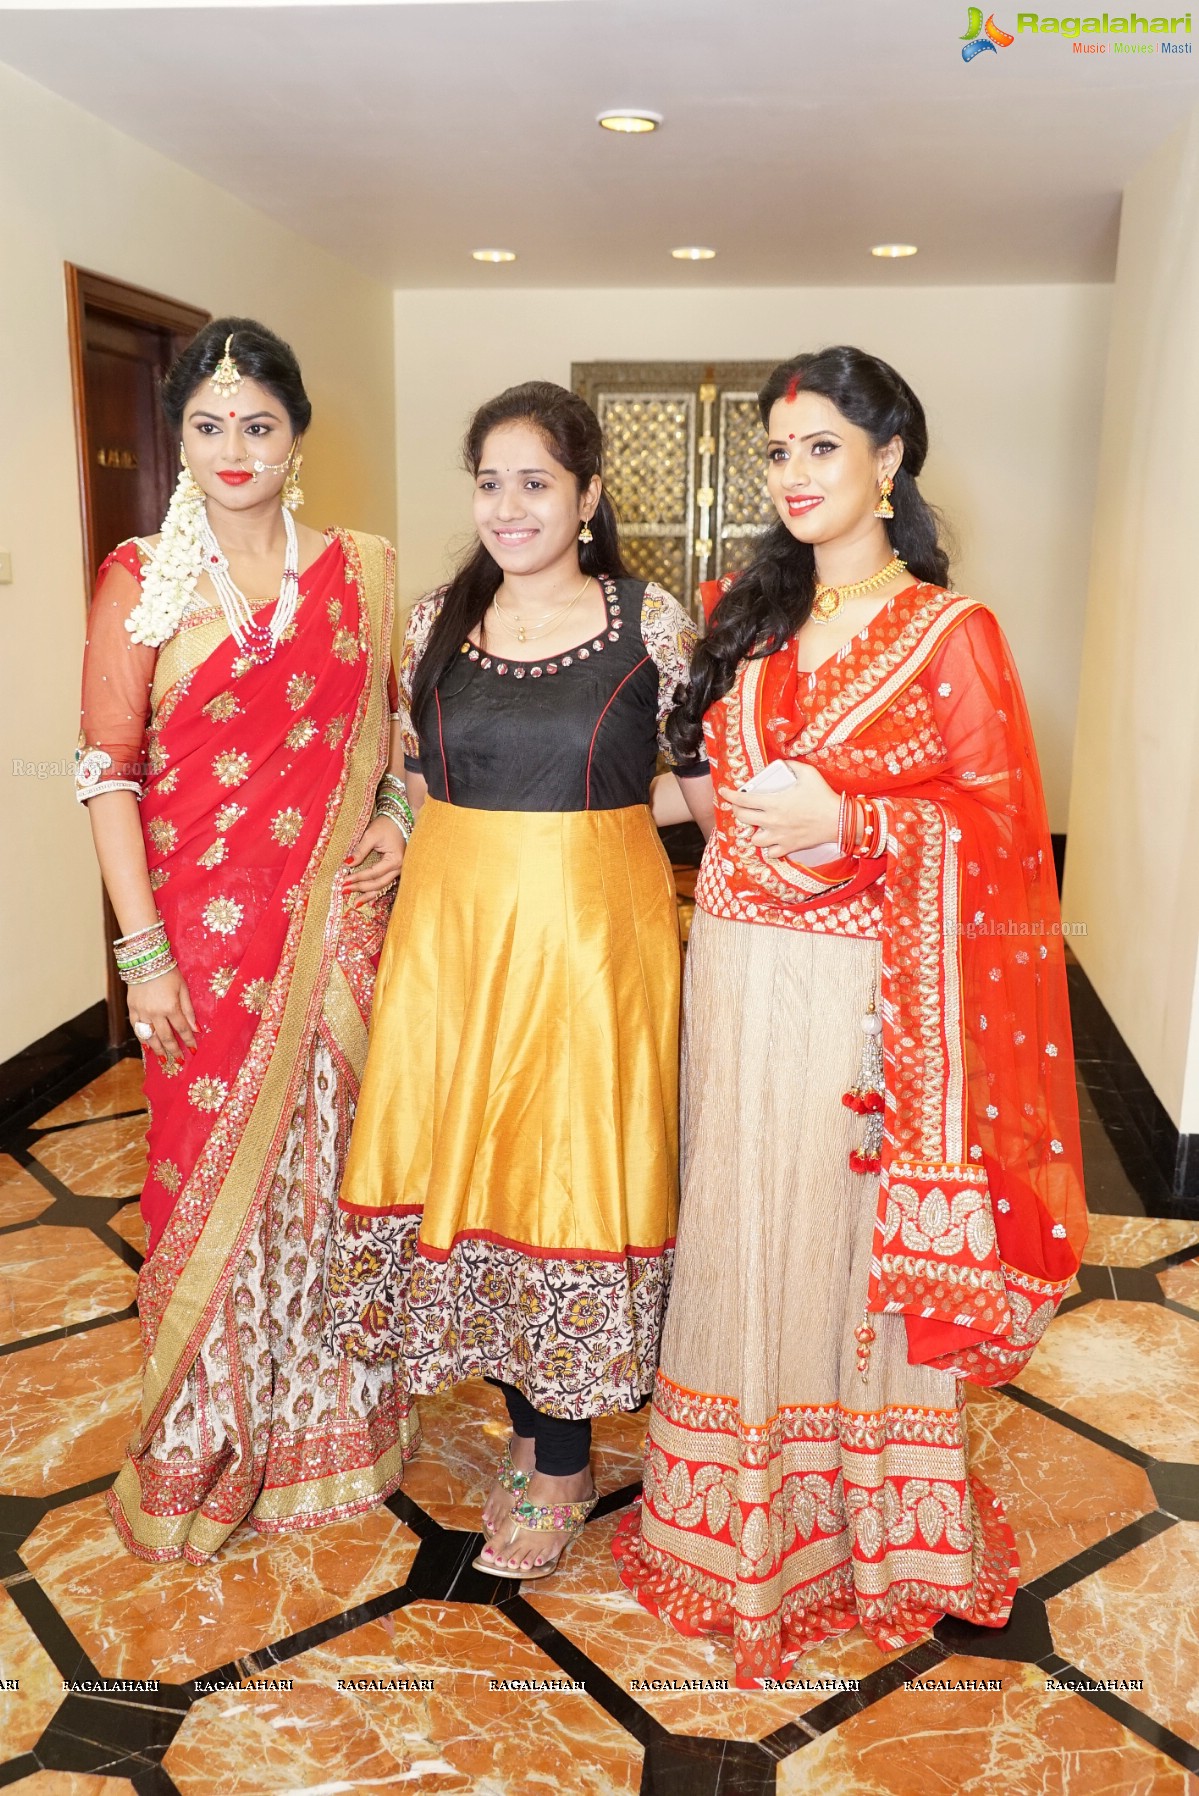 Pre Ugadi Celebrations by Divinos Ladies Club, Hyderabad